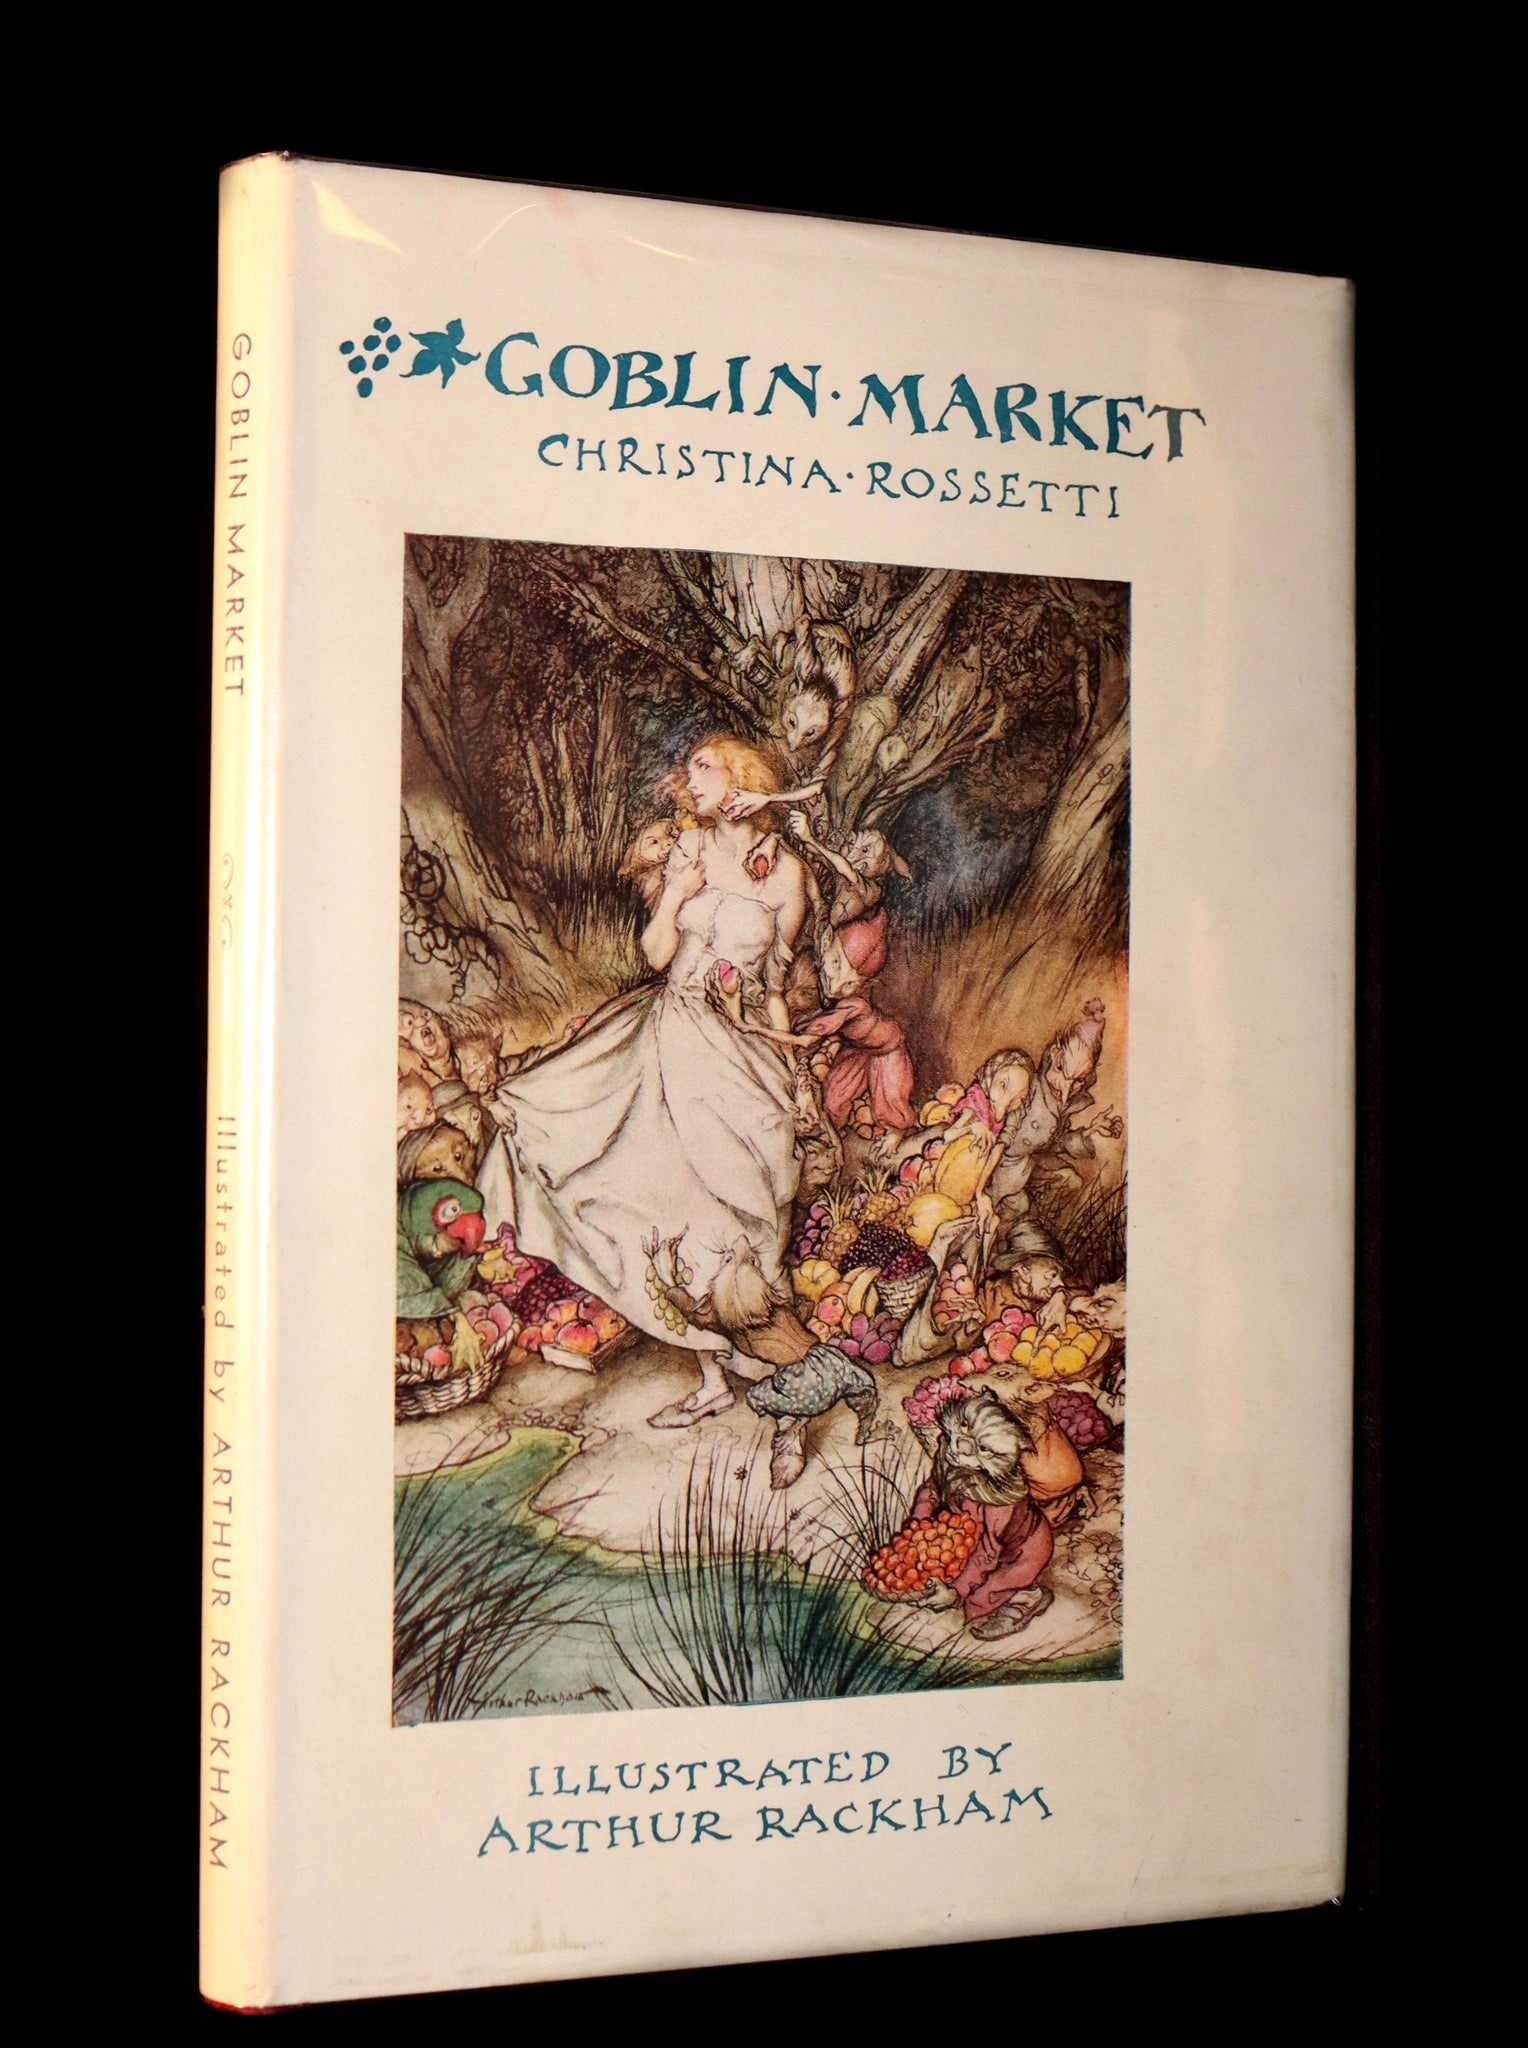 1933 Rare Book - Goblin Market by Christina Rossetti illustrated by Arthur Rackham. 1st US EDITION.